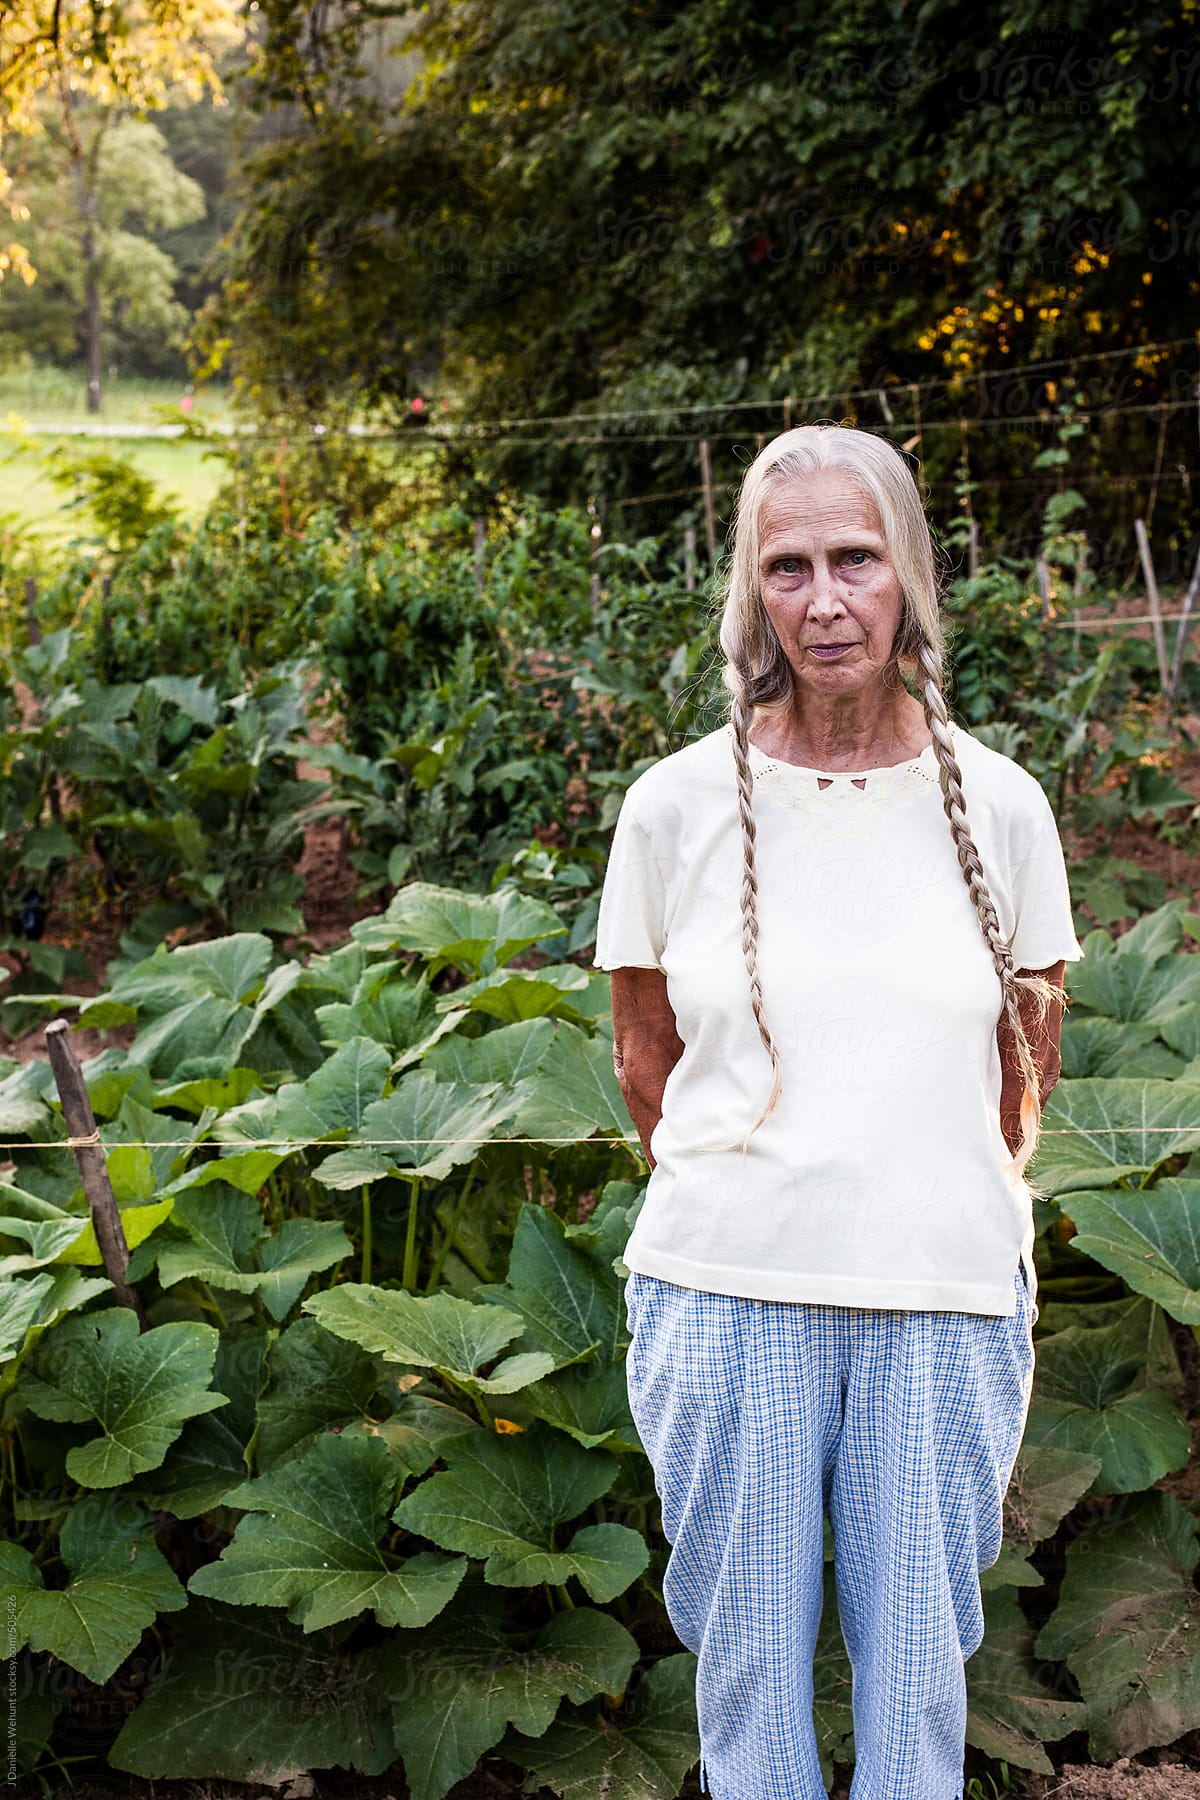 Elderly woman with blonde braids standing in front of vegetable garden